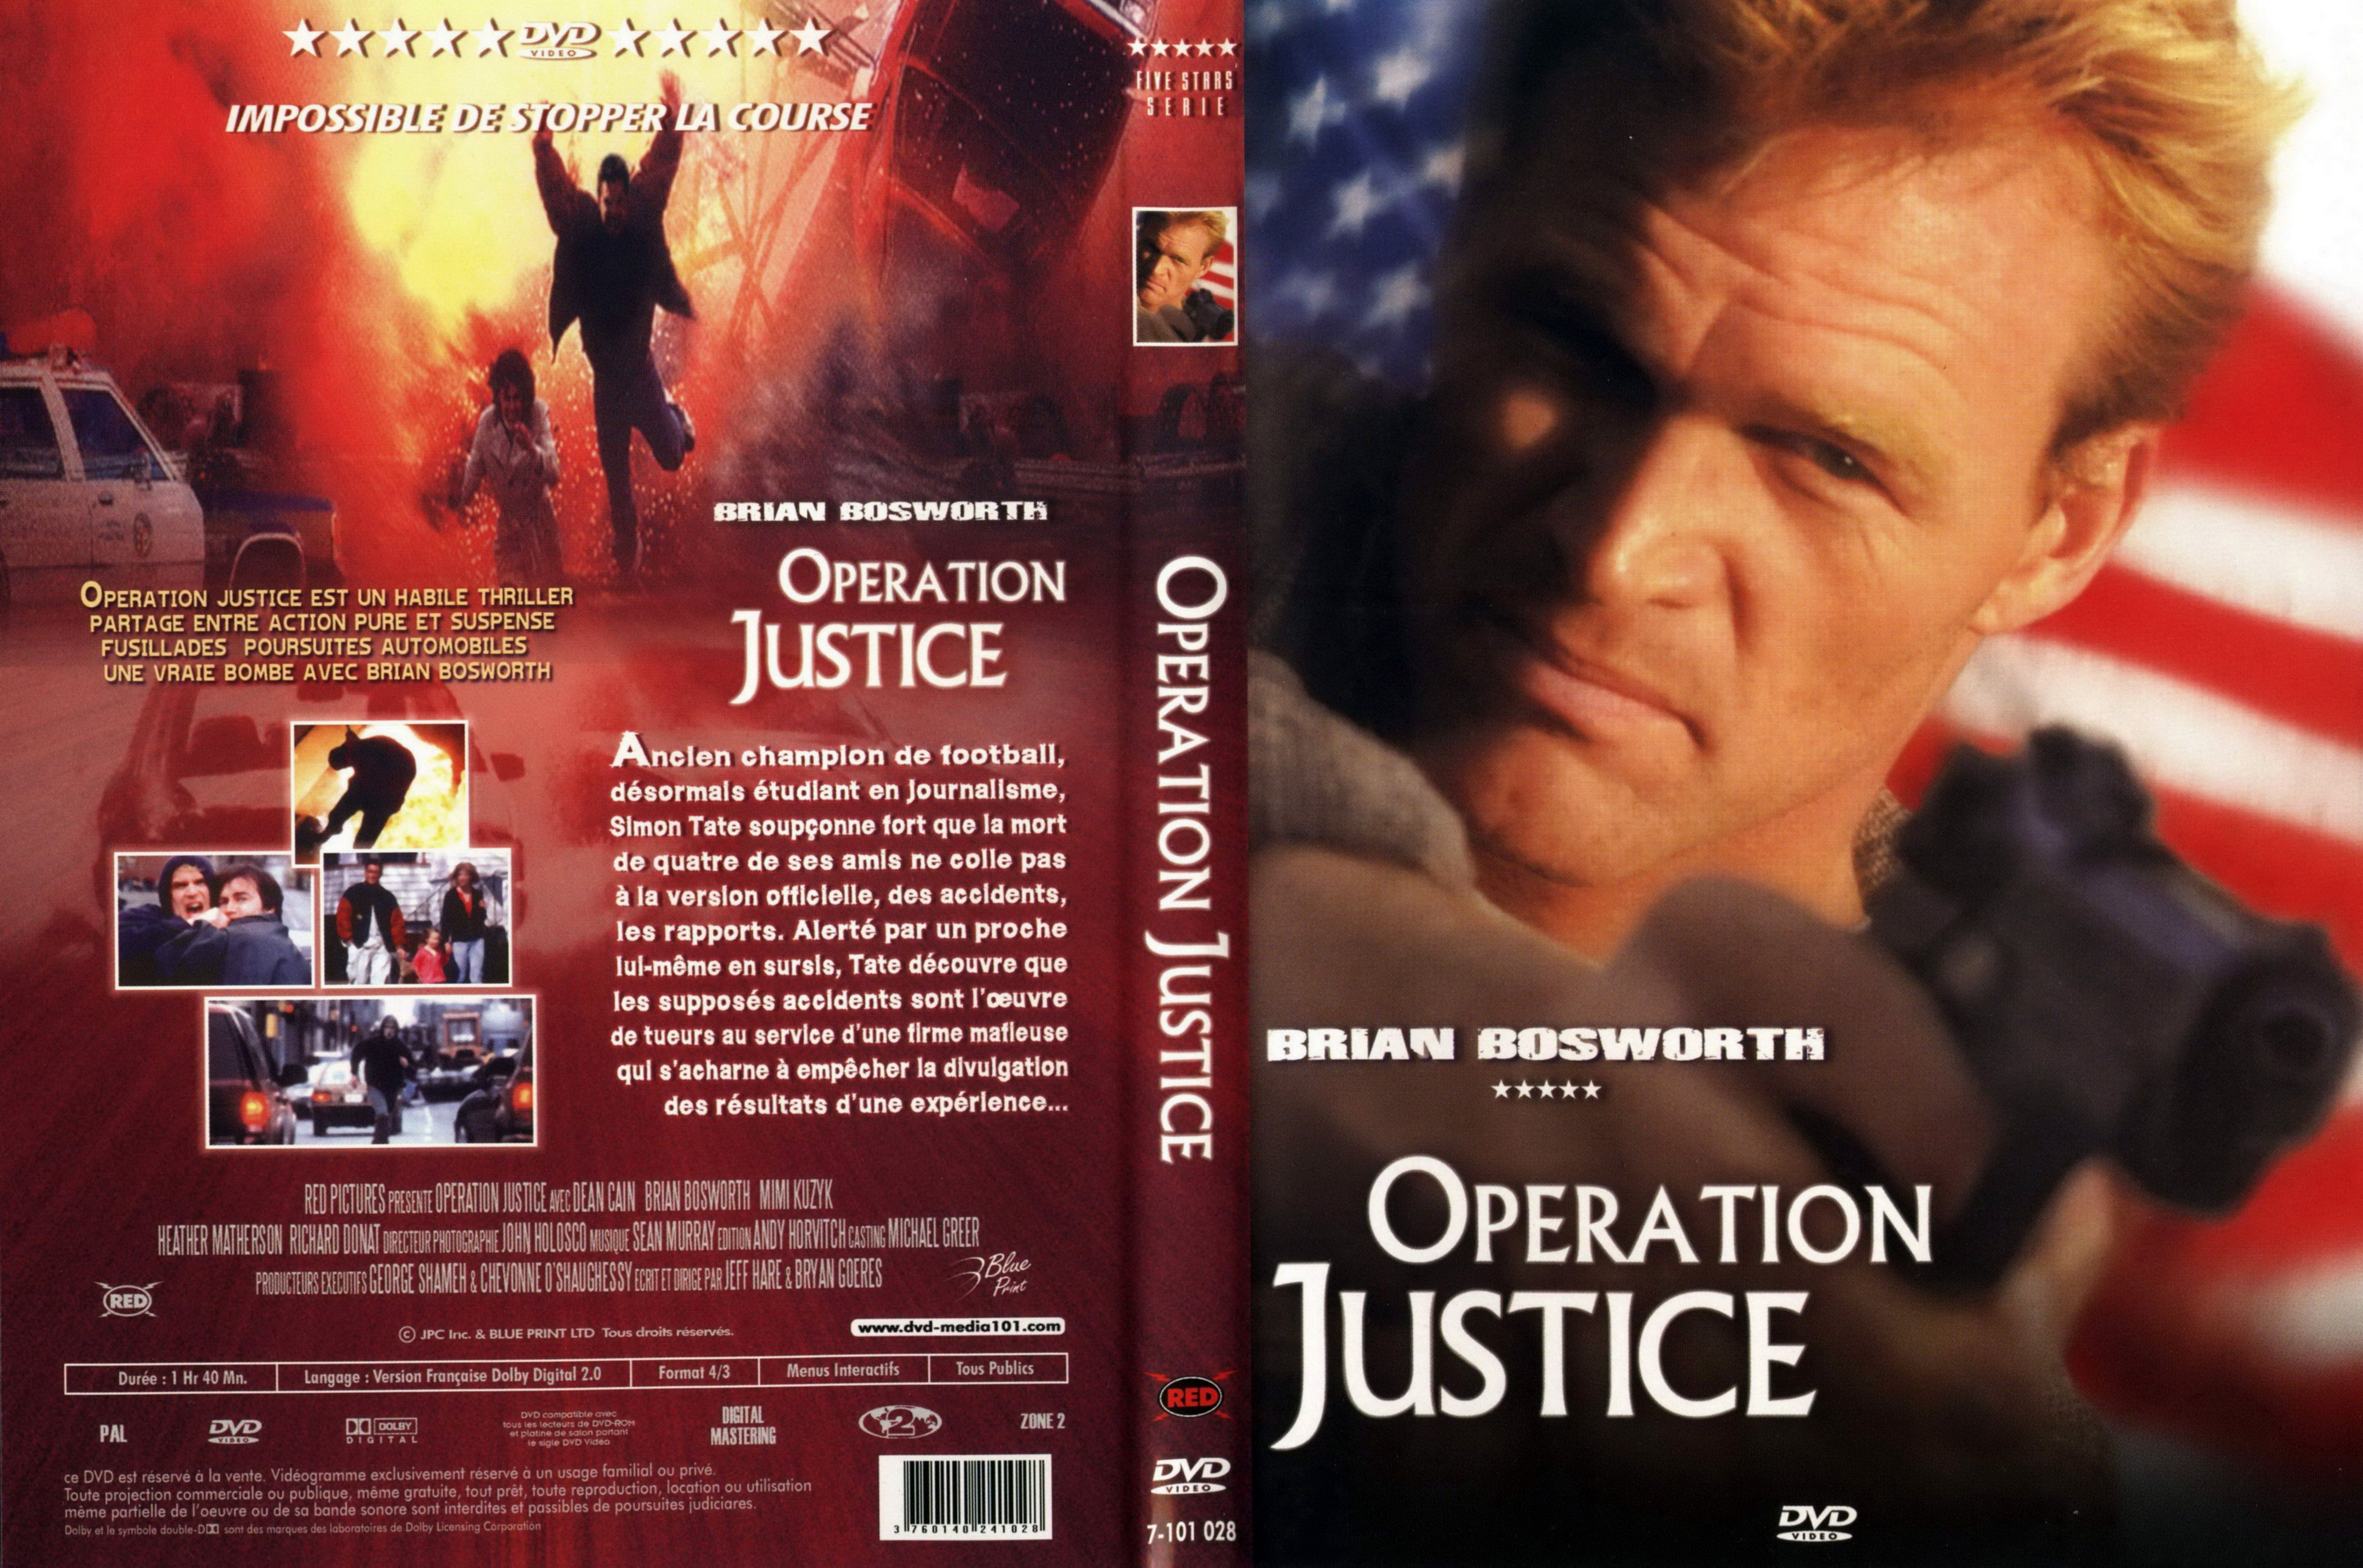 Jaquette DVD Opration justice